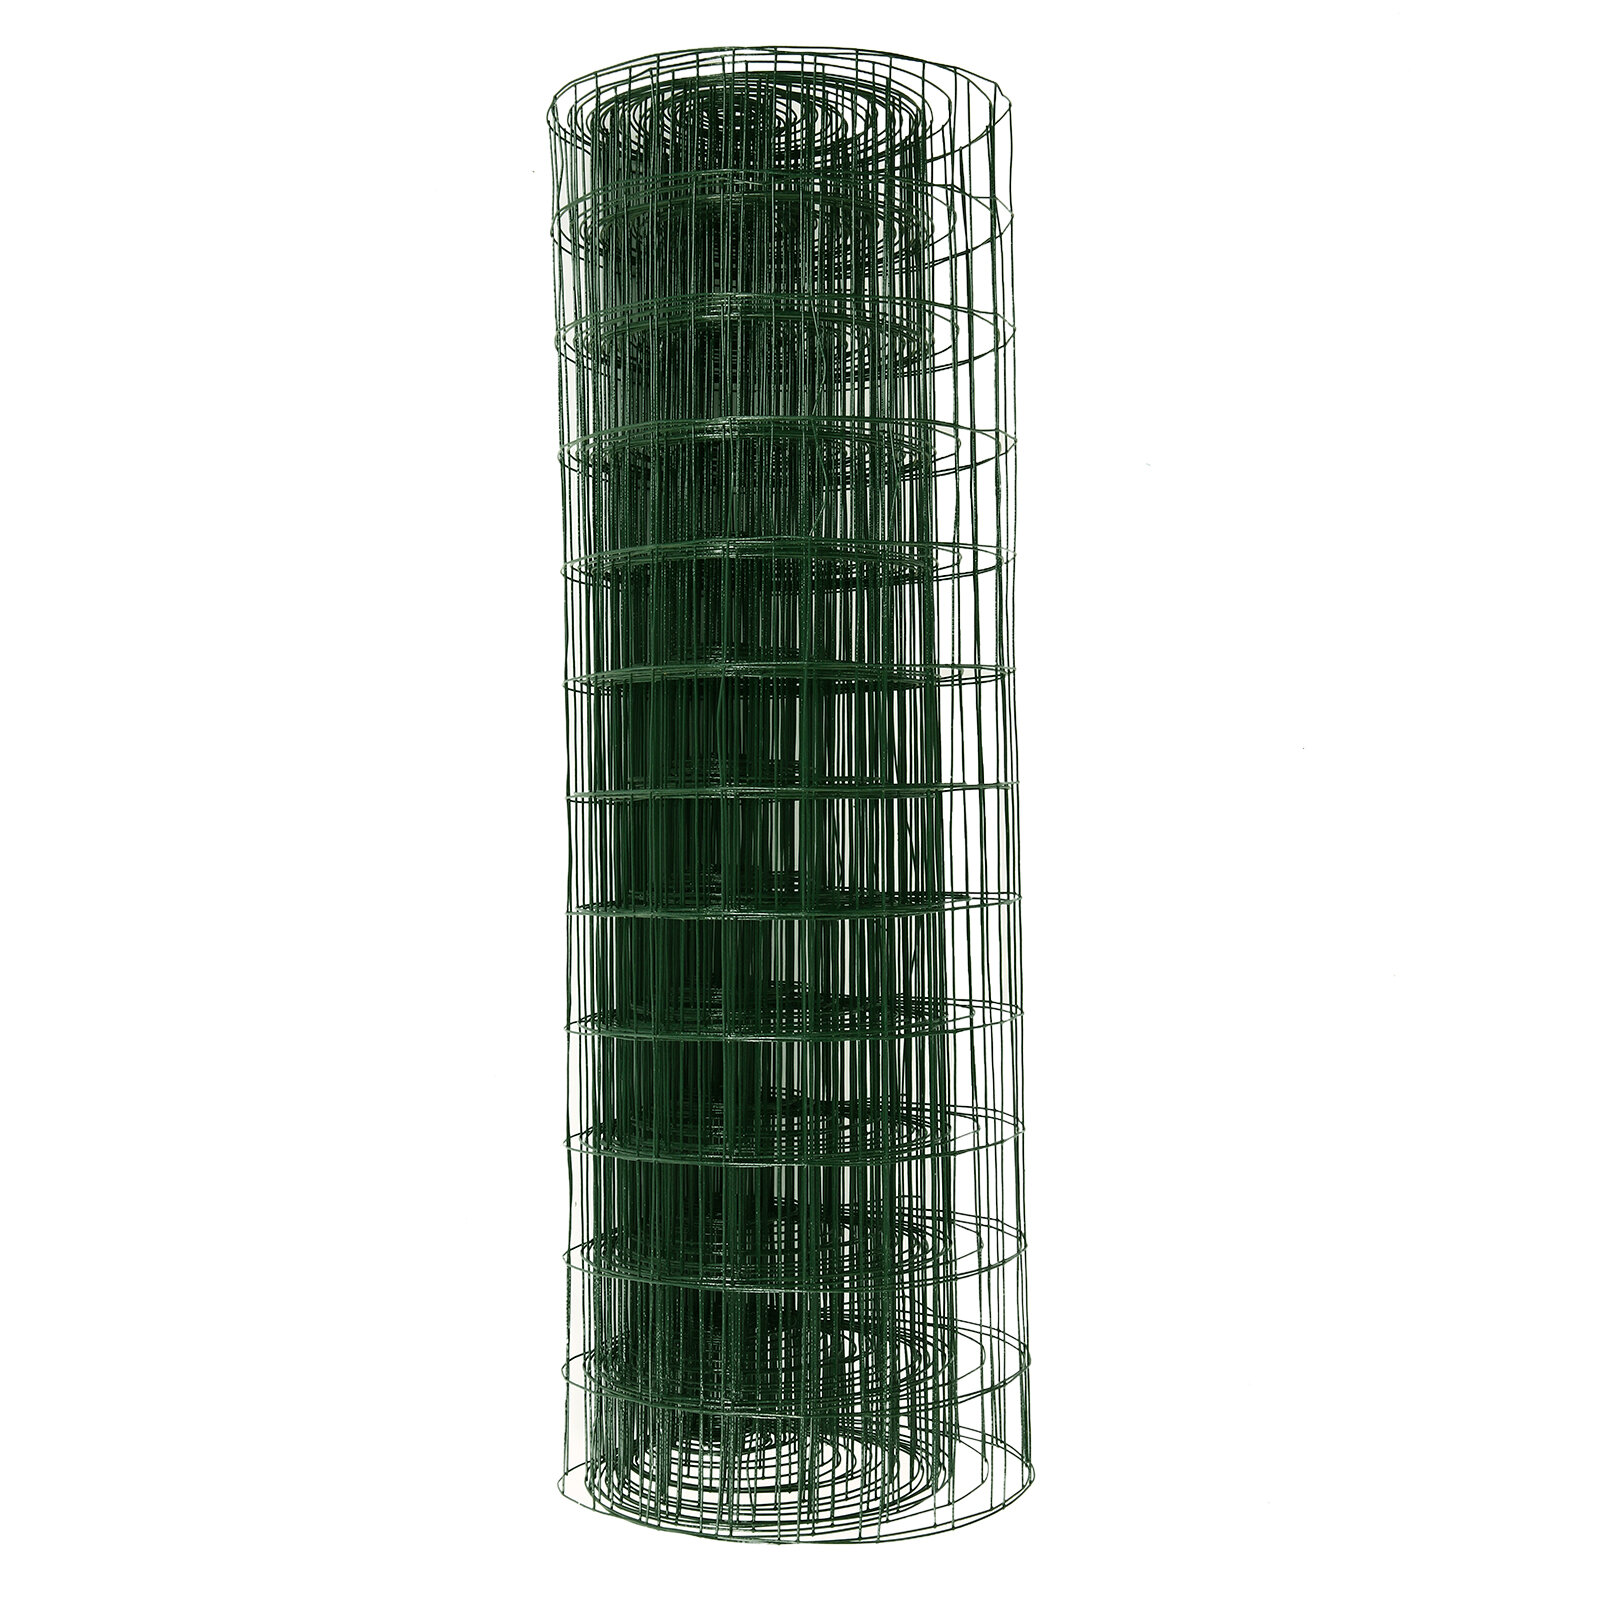 Mesh Galvanized Poultry Netting Chicken/Rabbit/Duck Wire Fence36"x16' Green 